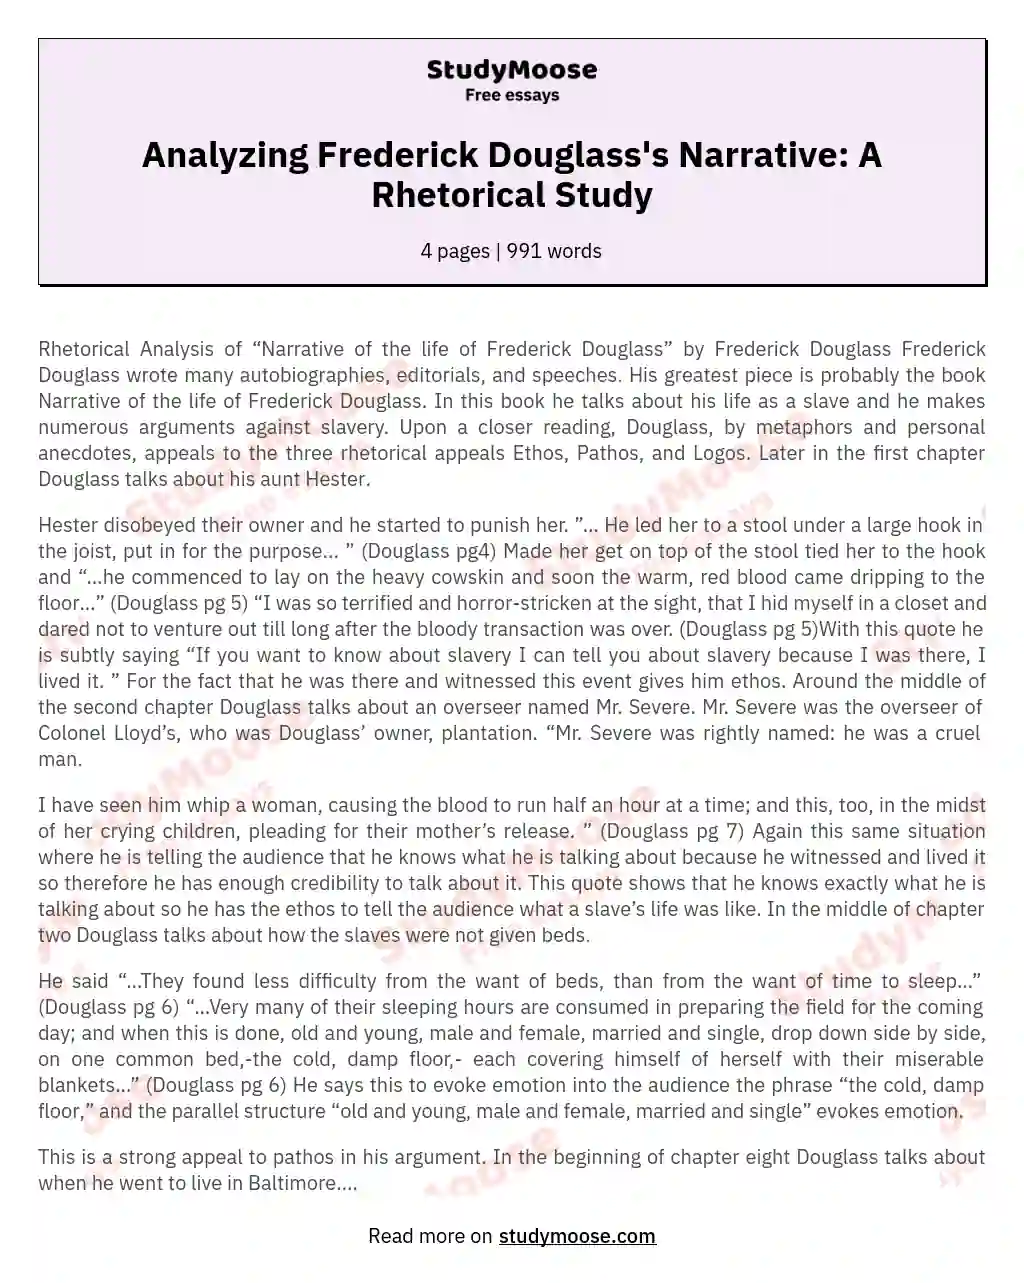 Analyzing Frederick Douglass's Narrative: A Rhetorical Study essay